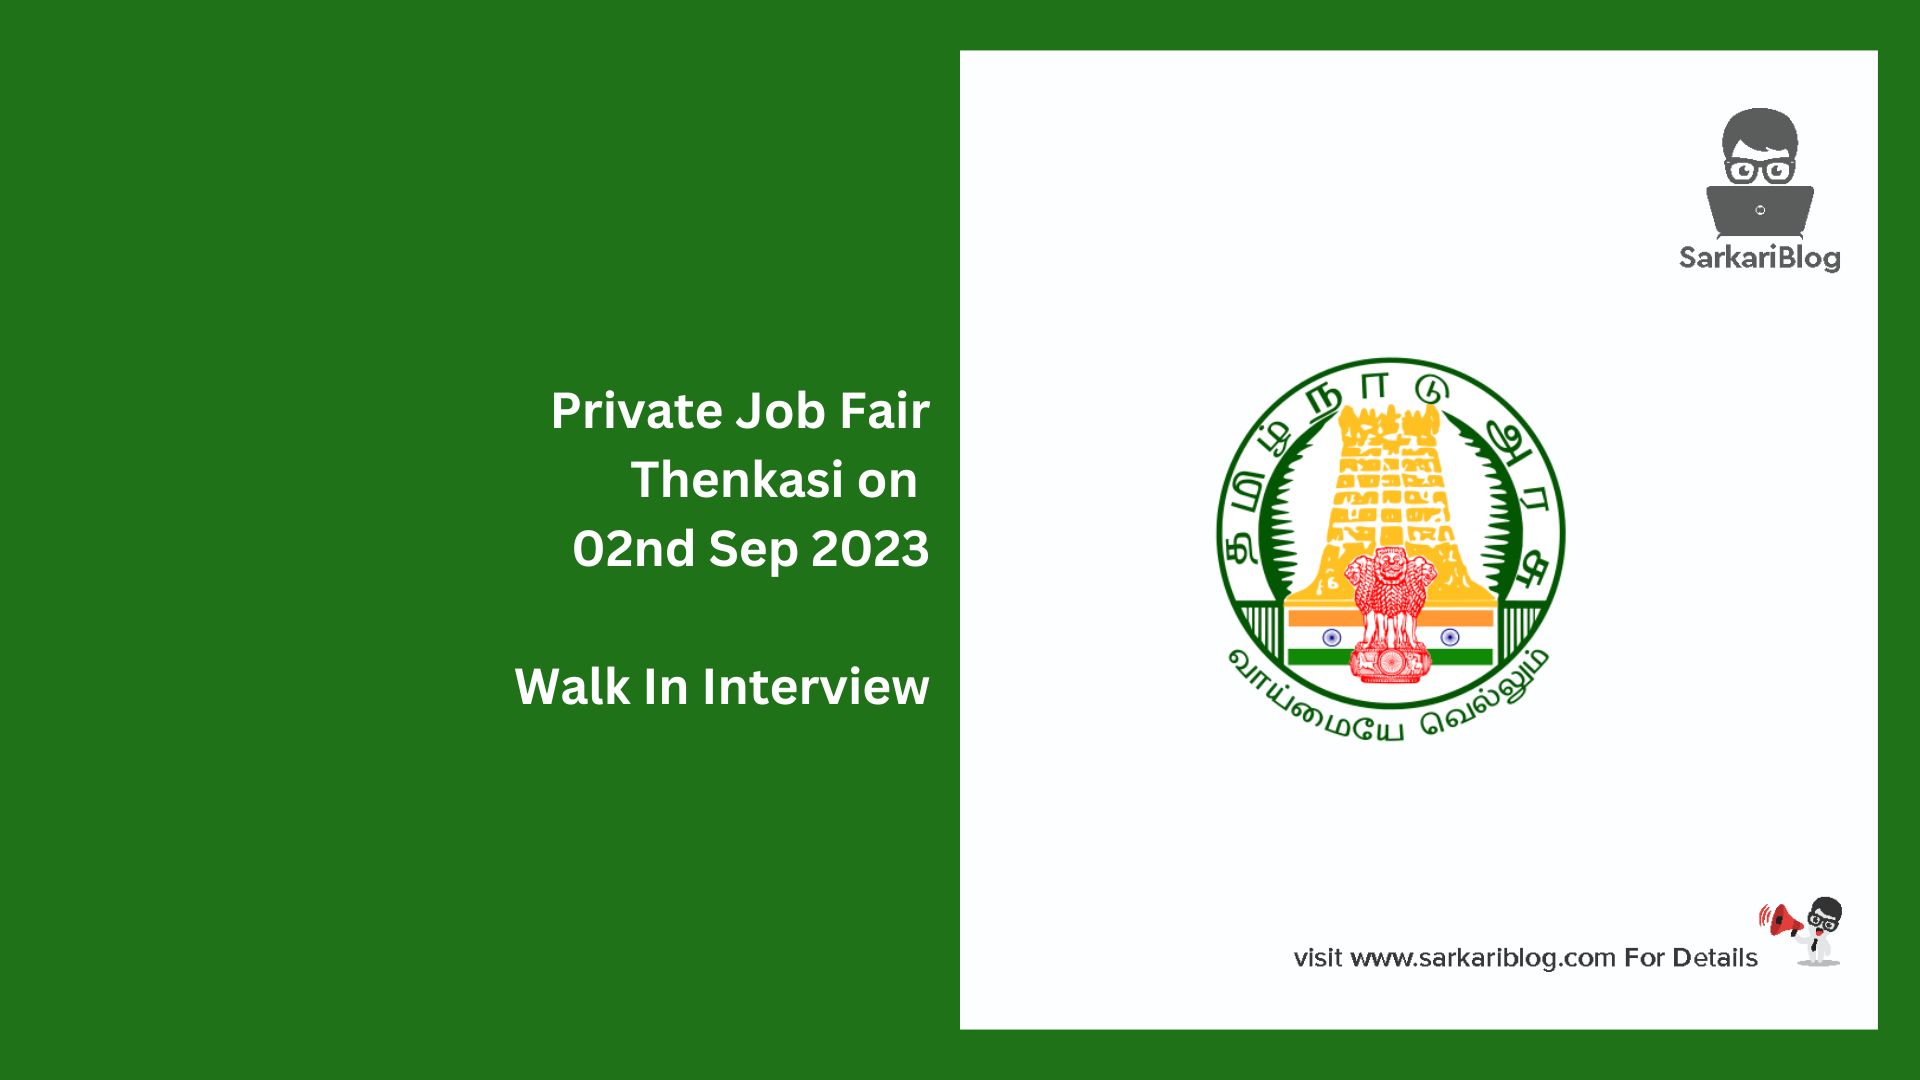 Private Job Fair Thenkasi on 02nd Sep 2023